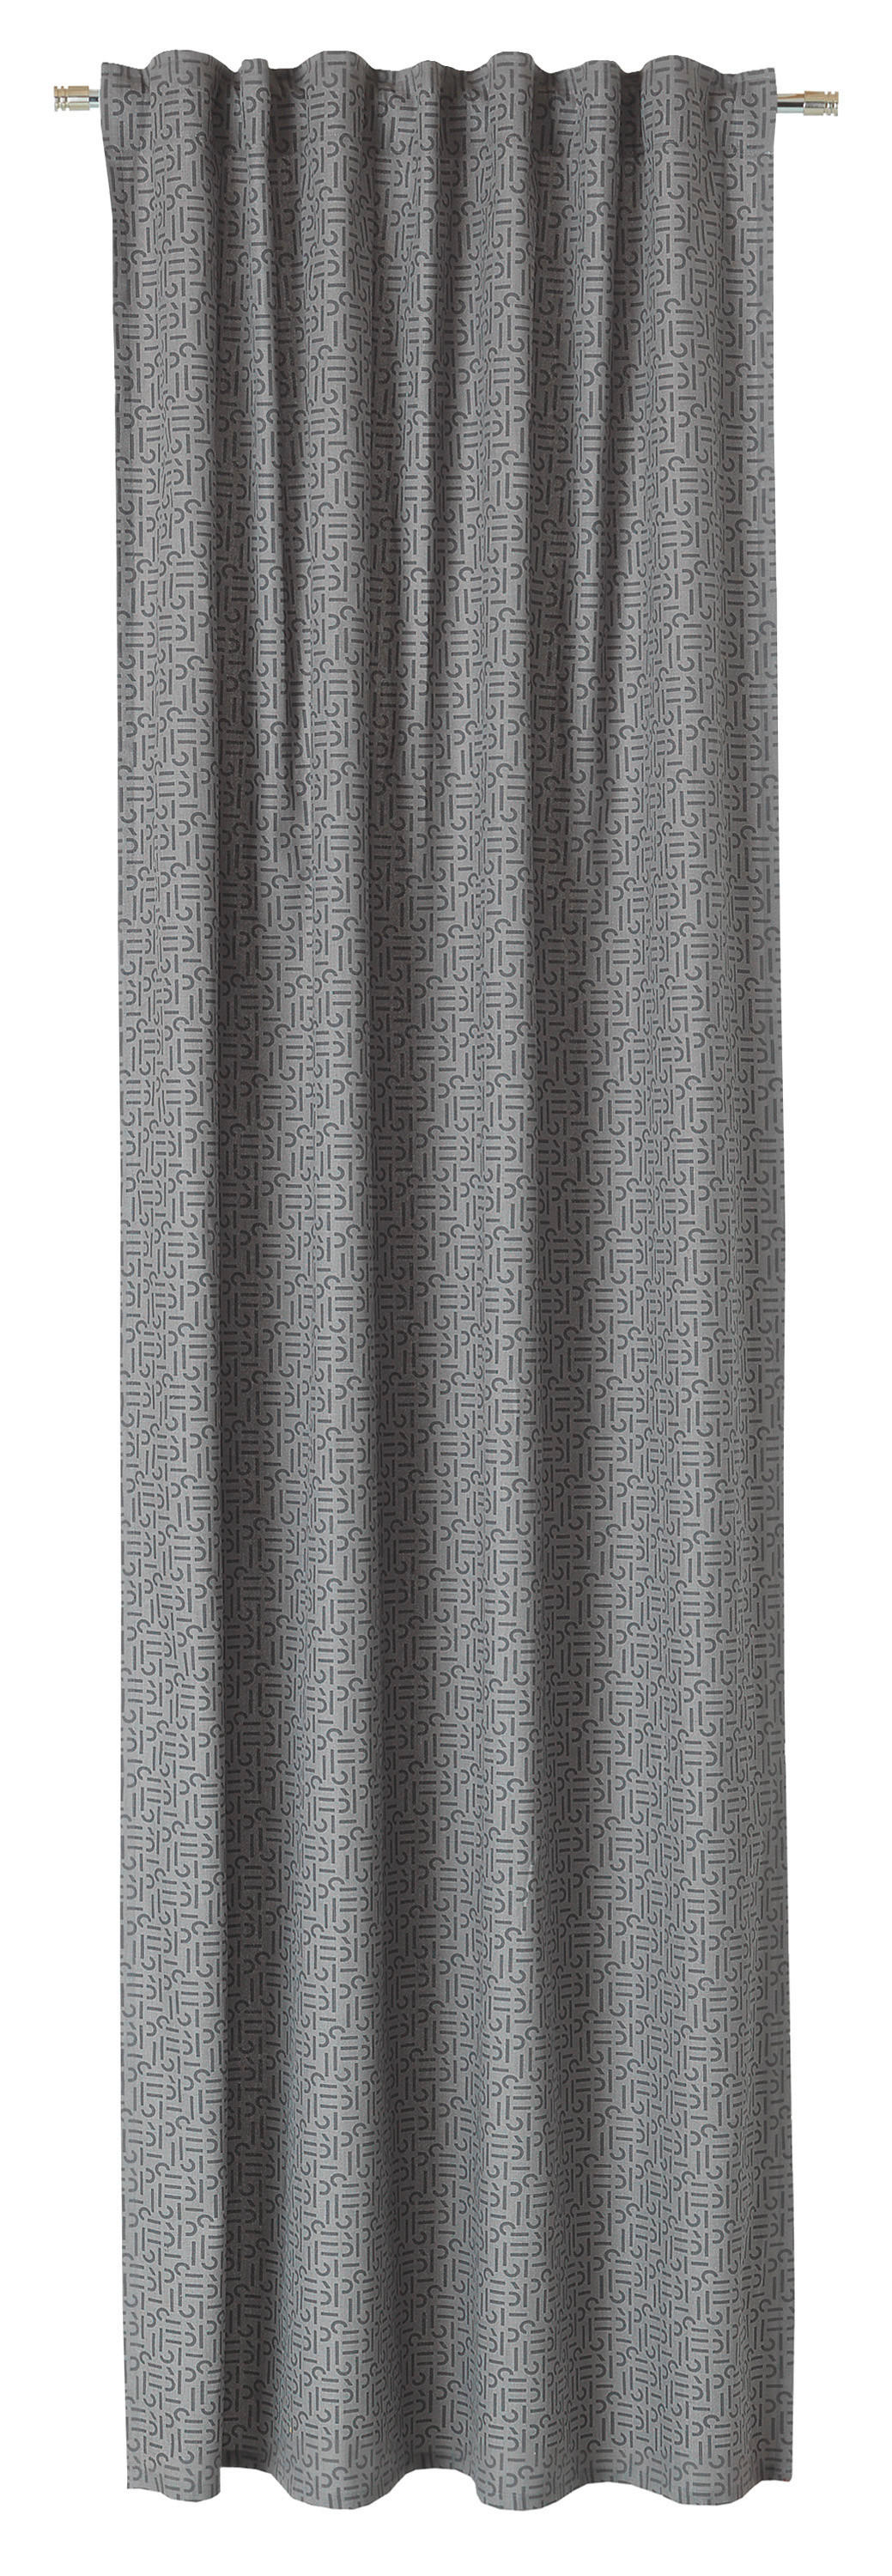 FERTIGVORHANG E-Scatter blickdicht 130/250 cm   - Anthrazit/Grau, Design, Textil (130/250cm) - Esprit